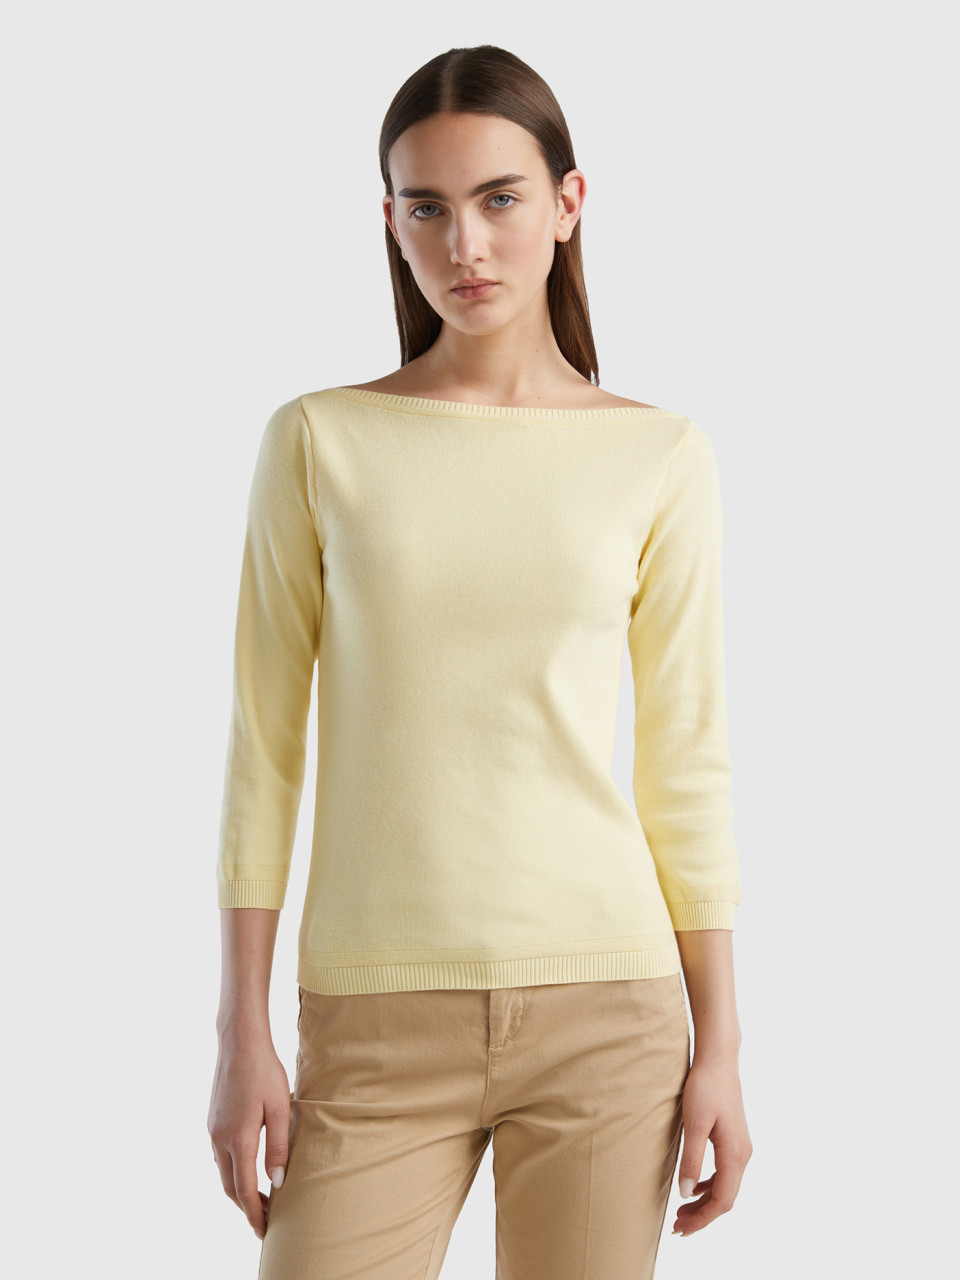 Benetton, 100% Cotton Boat Neck Sweater, Yellow, Women